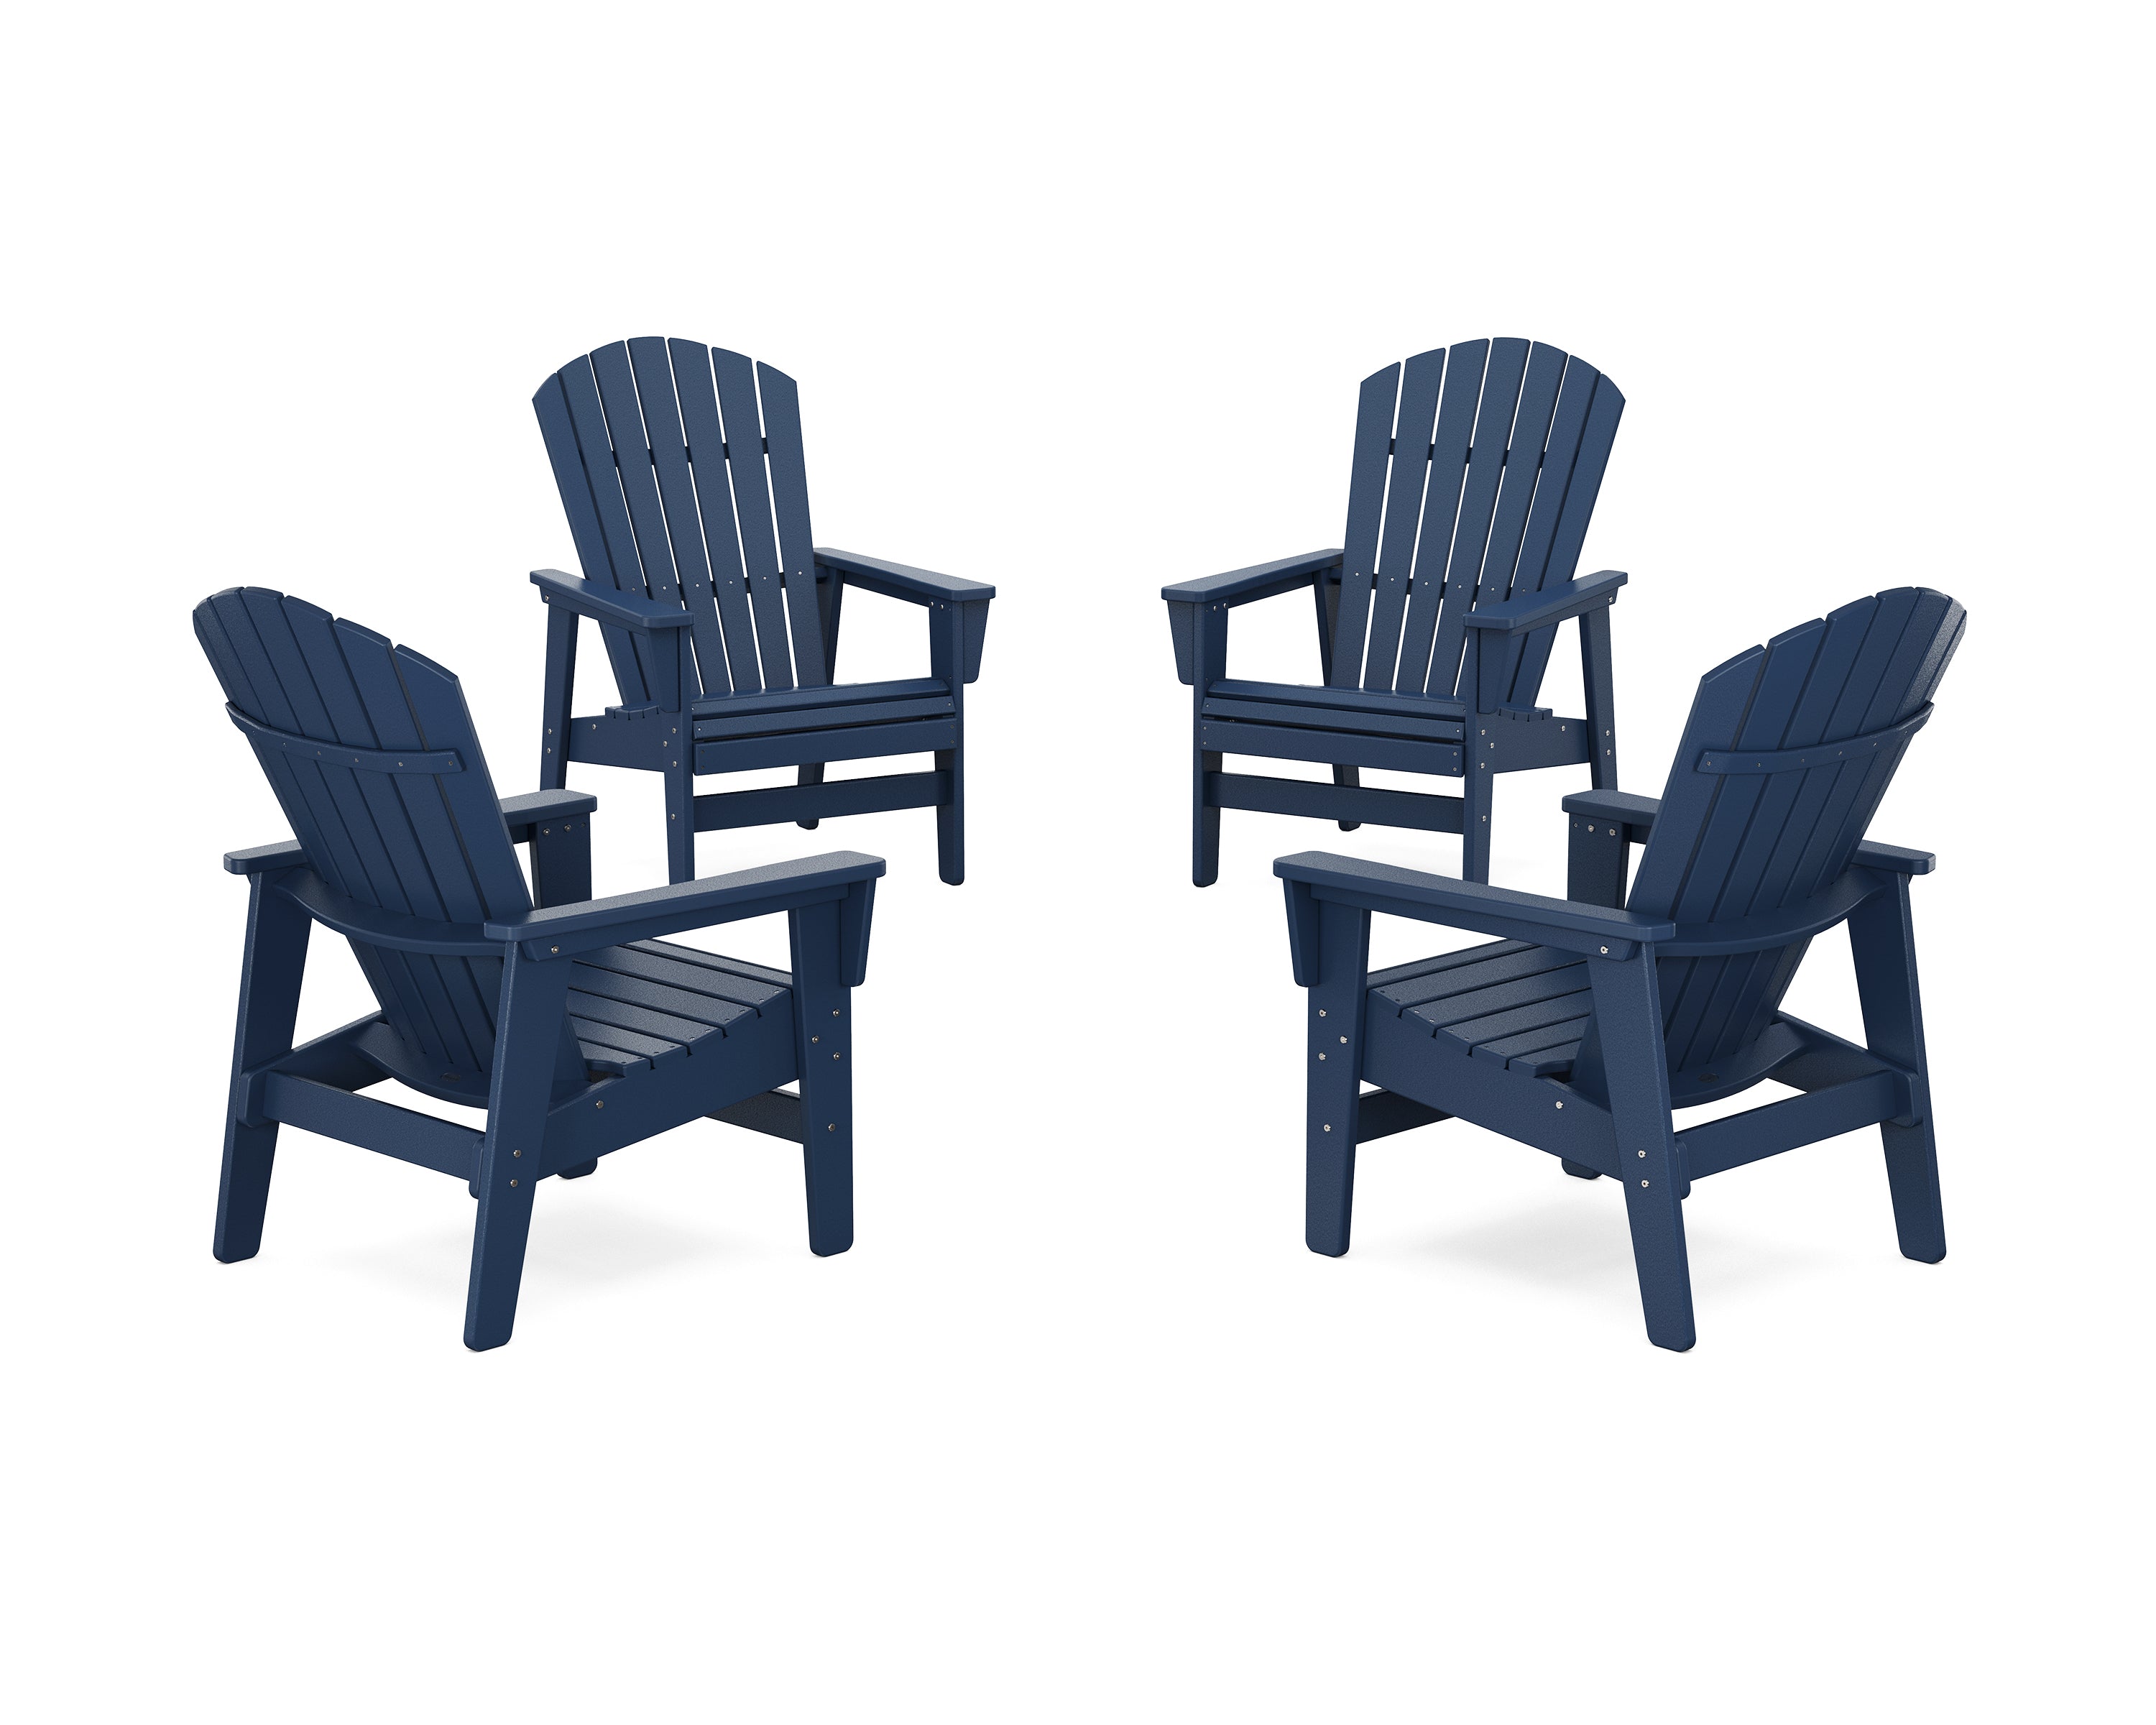 POLYWOOD® 4-Piece Nautical Grand Upright Adirondack Chair Conversation Set in Navy